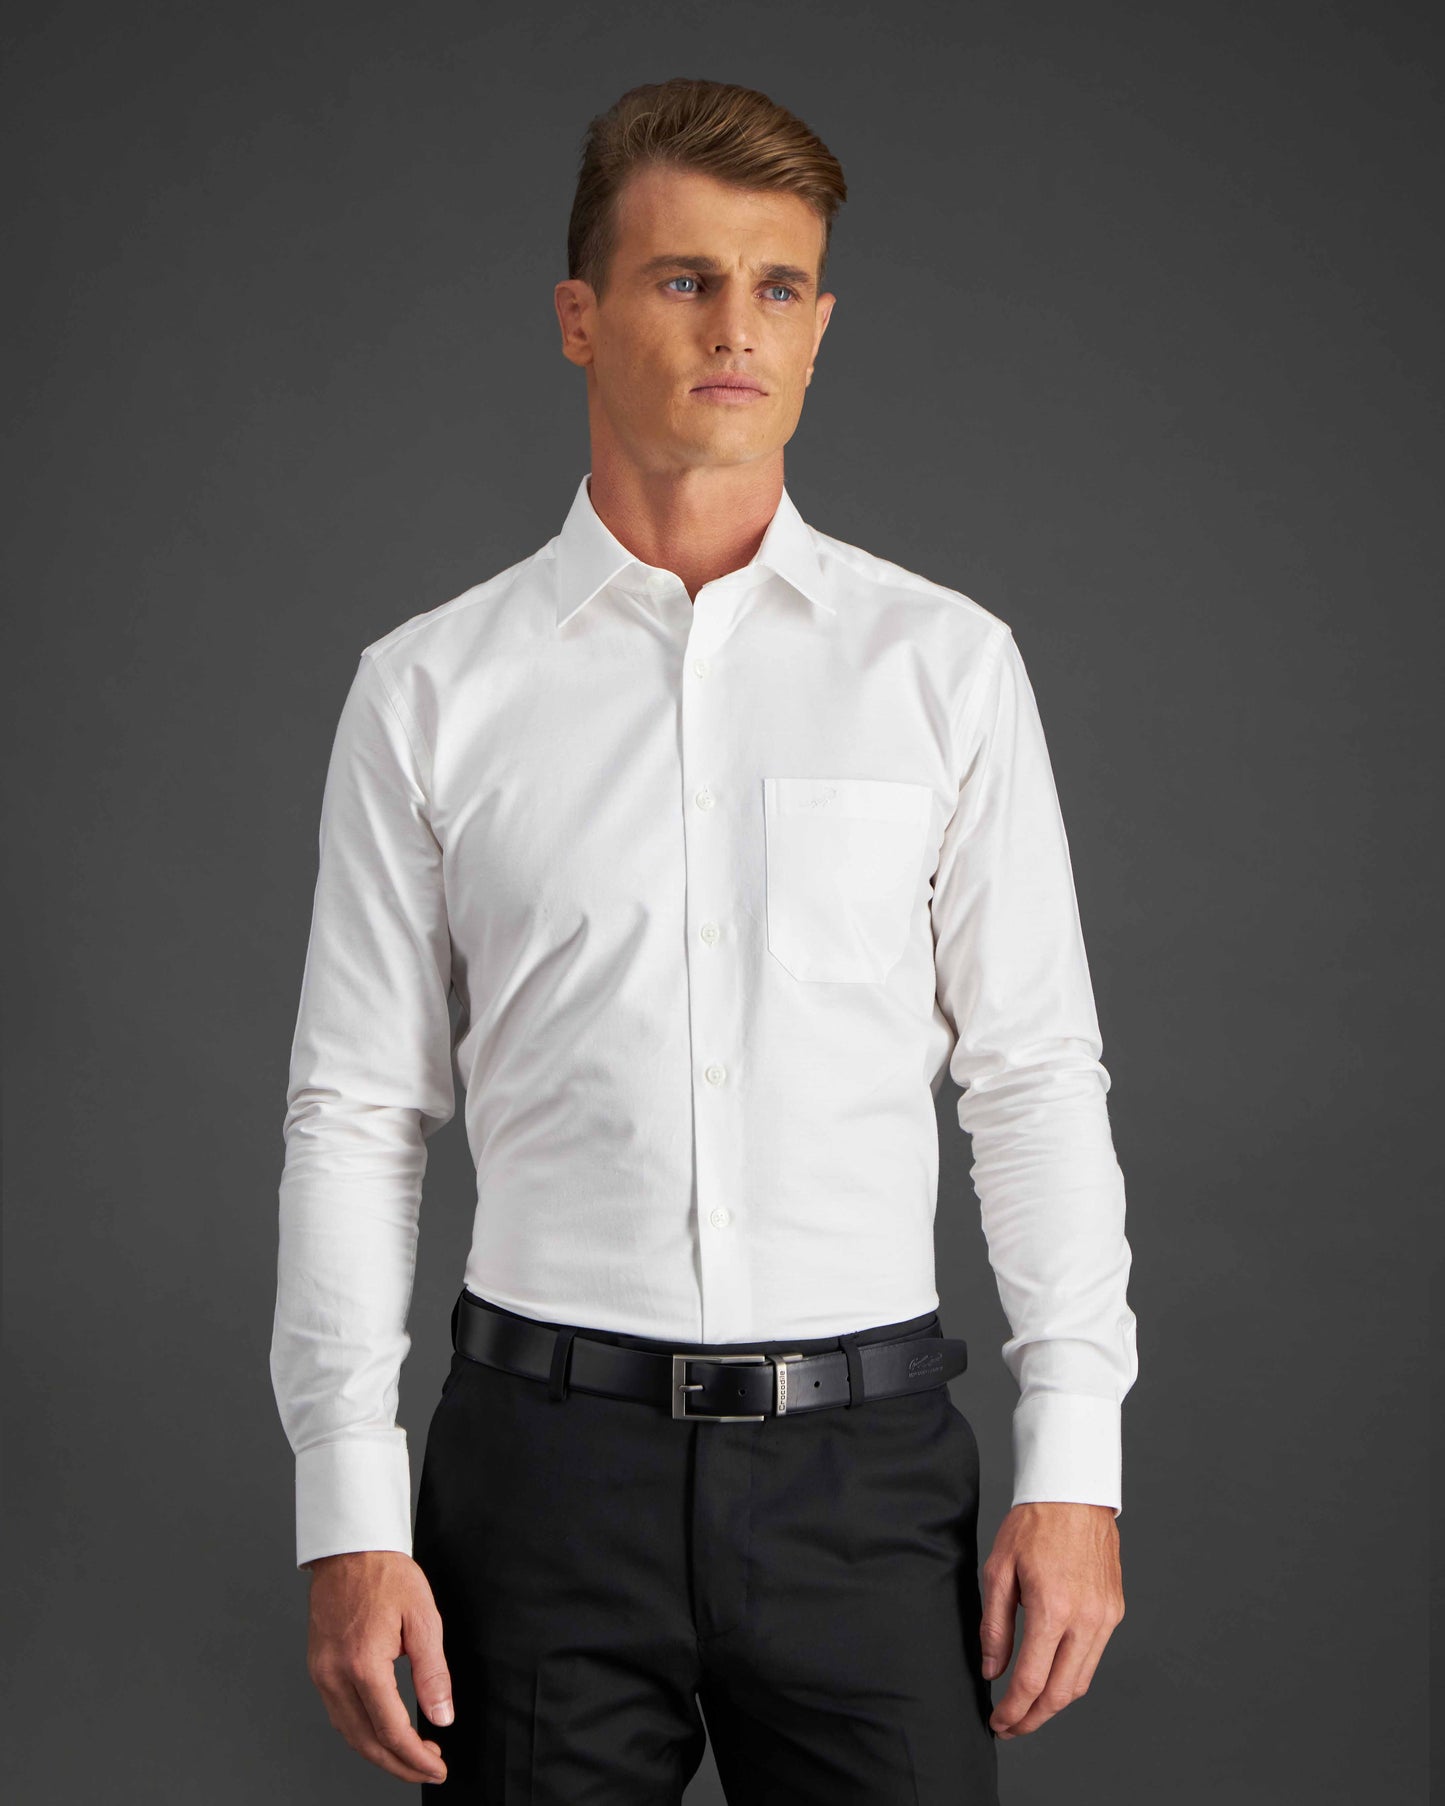 Crocodile Slim Fit Long sleeves-Formal Shirt - White